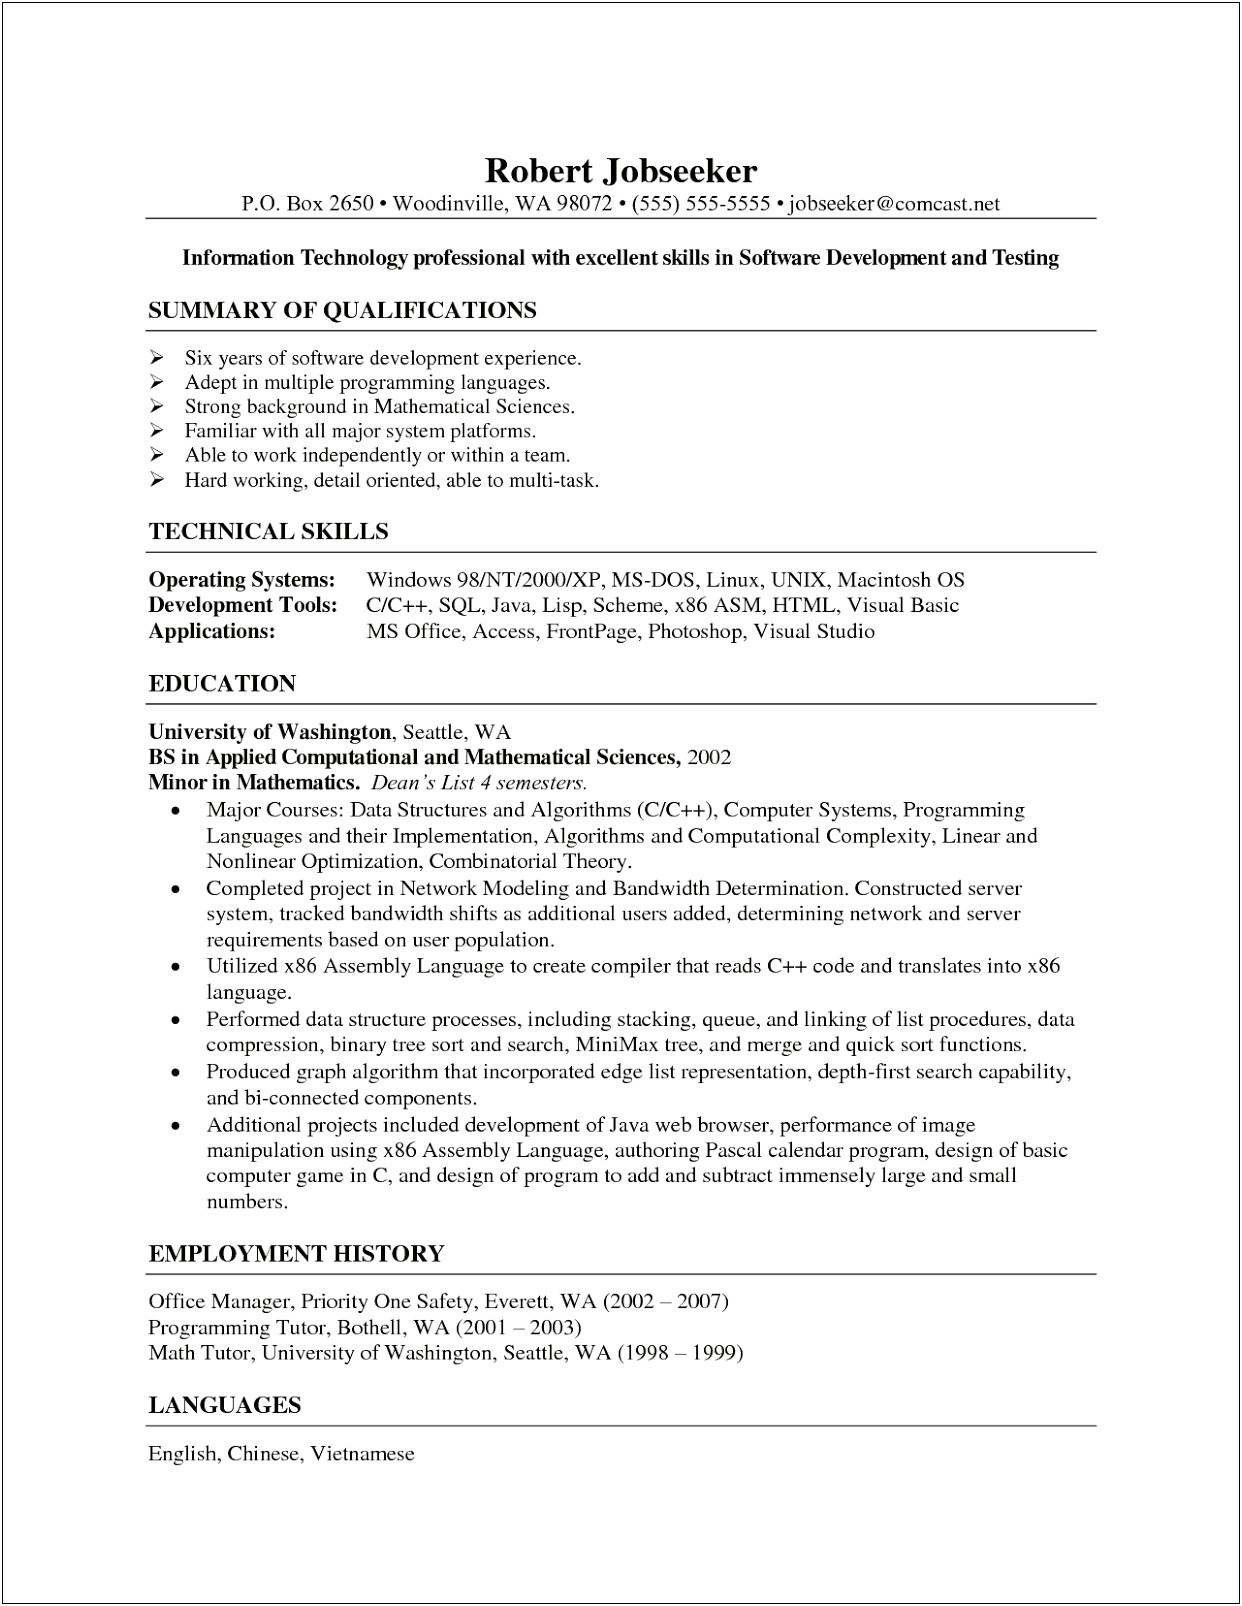 Resume Cover Letter Samples For Information Technology